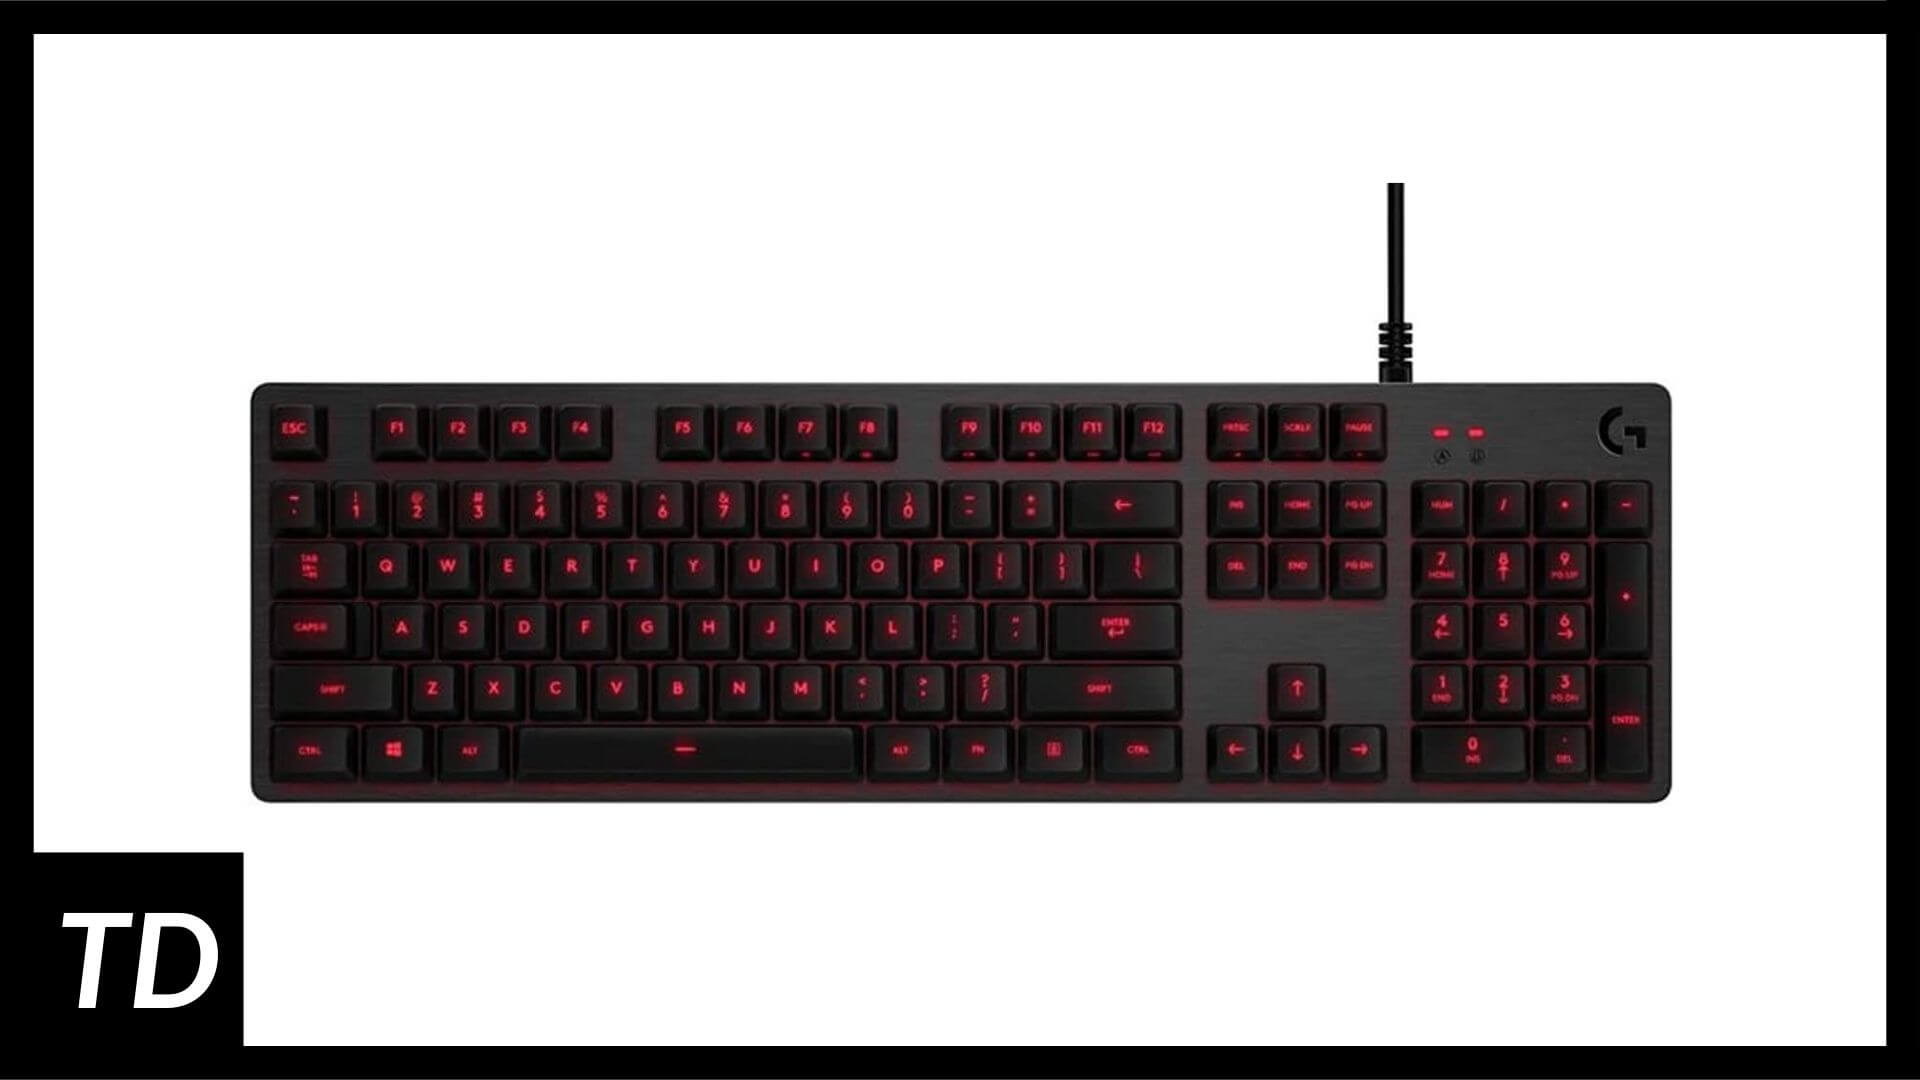 Logitech G413 Backlit Mechanical Gaming Keyboard